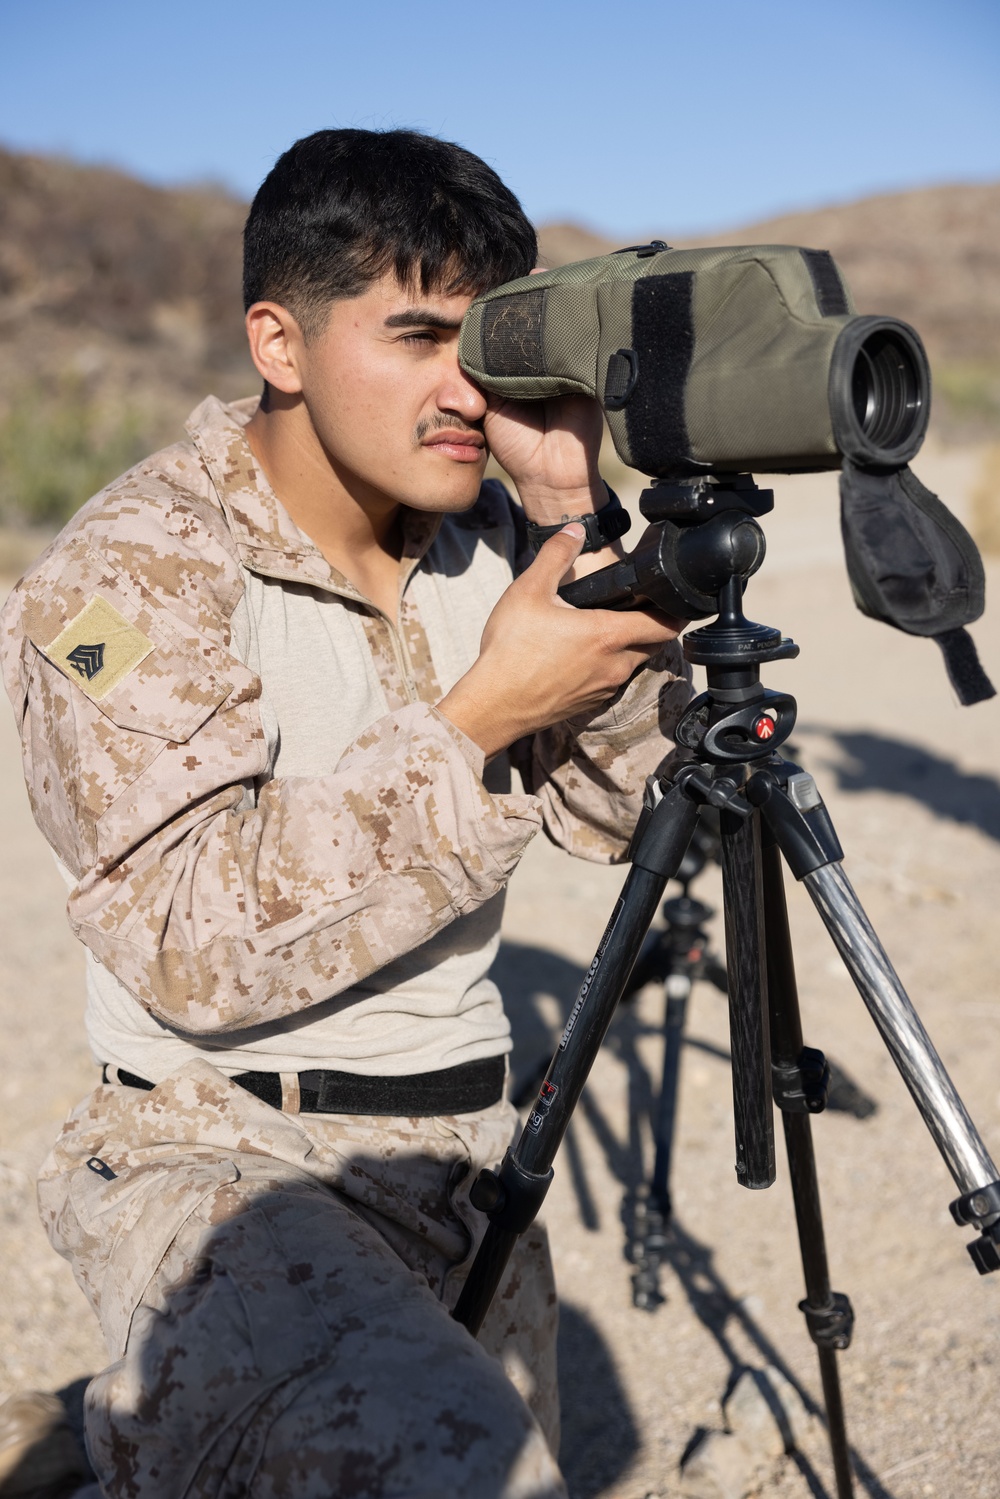 ITX 4-23: 1/23 Scout Sniper Platoon Range